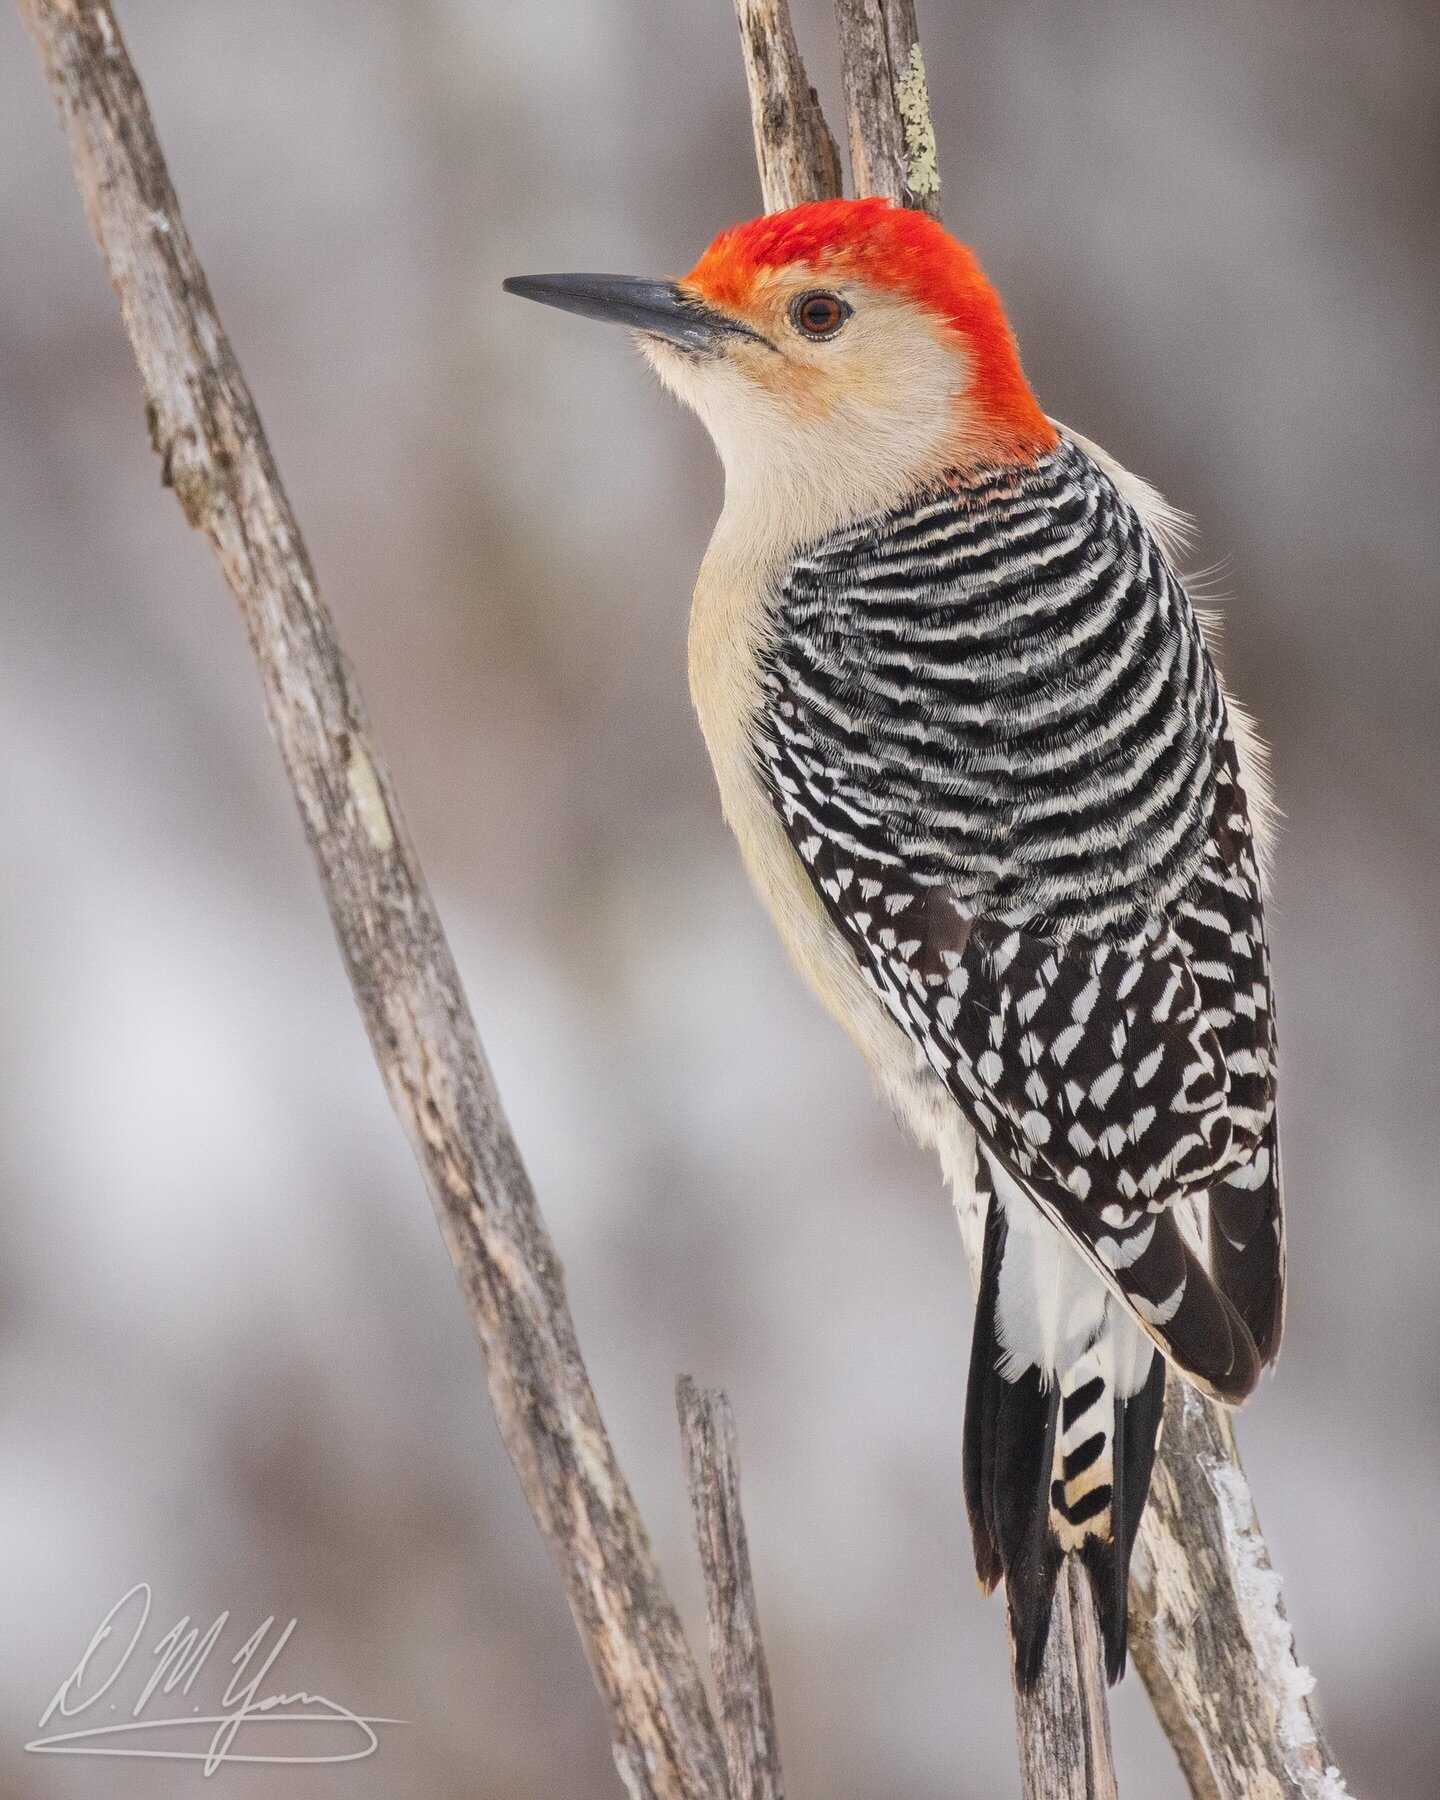 Male Red-bellied Woodpecker in a snowy marsh today. 
_____
#redbelliedwoodpecker #woodpecker #birds #wildbirds #bestbirdshots #birdlovers #birding #birdphotography #birdingphotography #birder #birdsofinstagram #birdwatching #feather_perfection #birdf